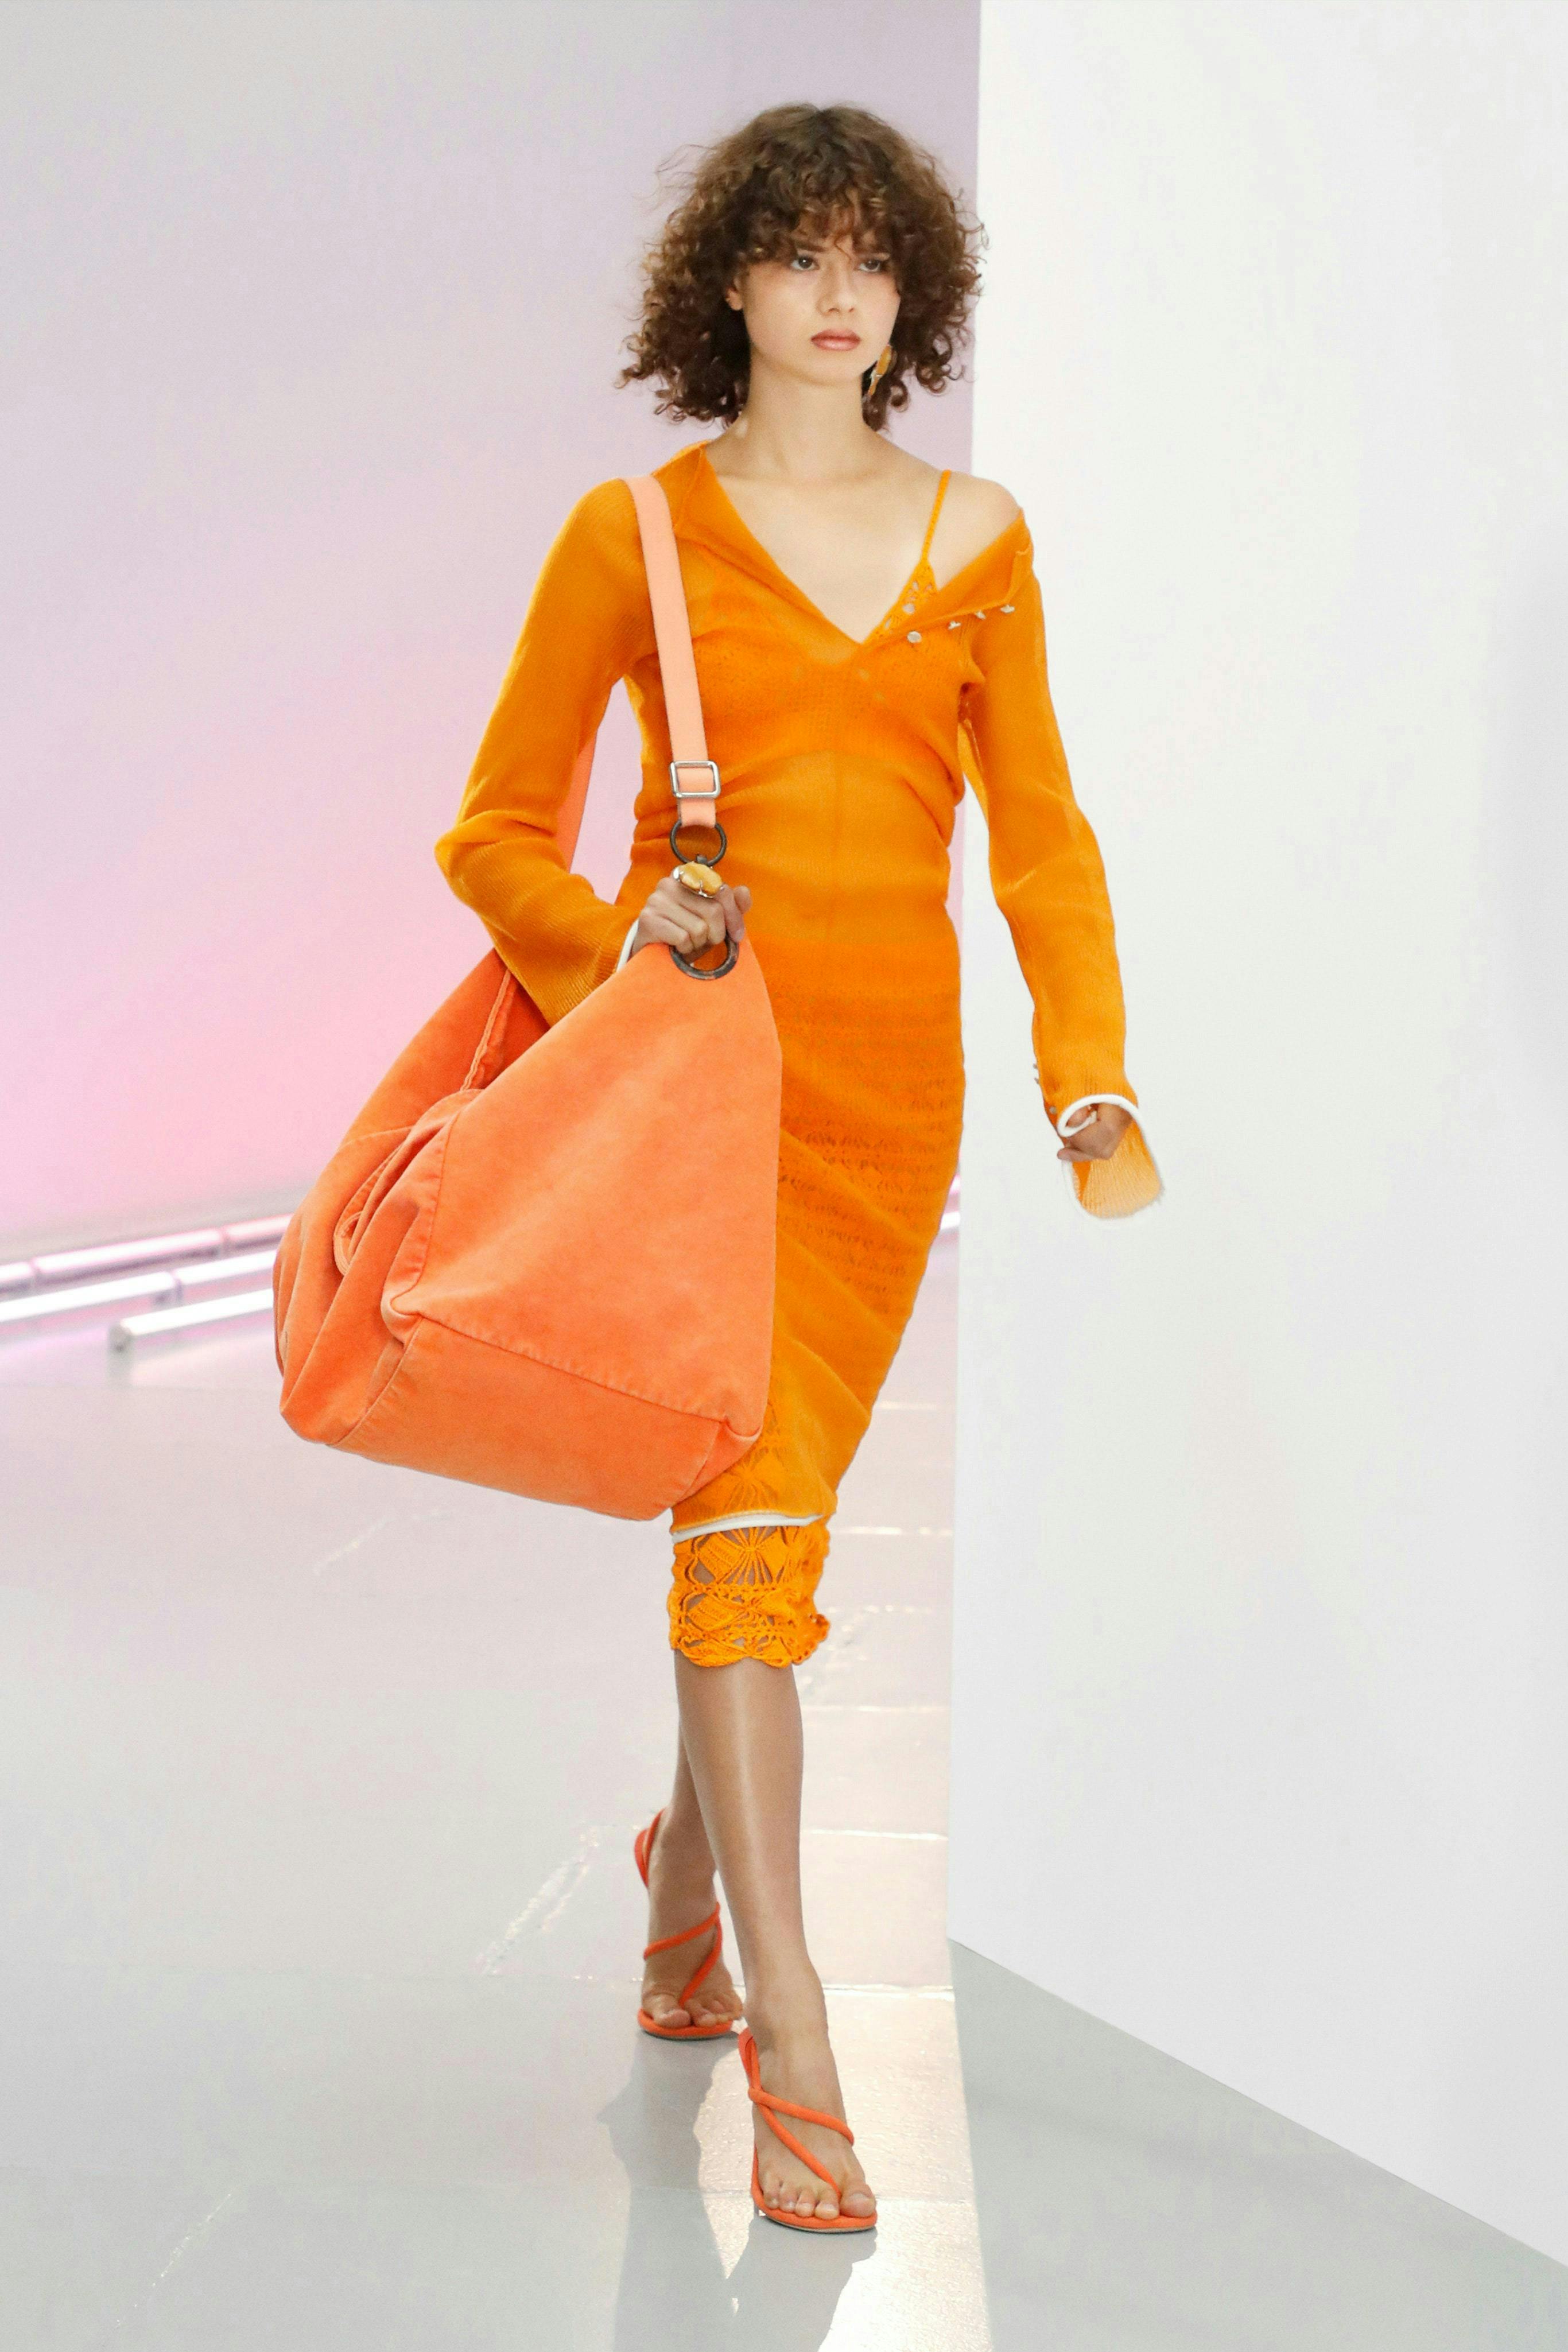 clothing apparel sleeve long sleeve person human bag handbag accessories accessory